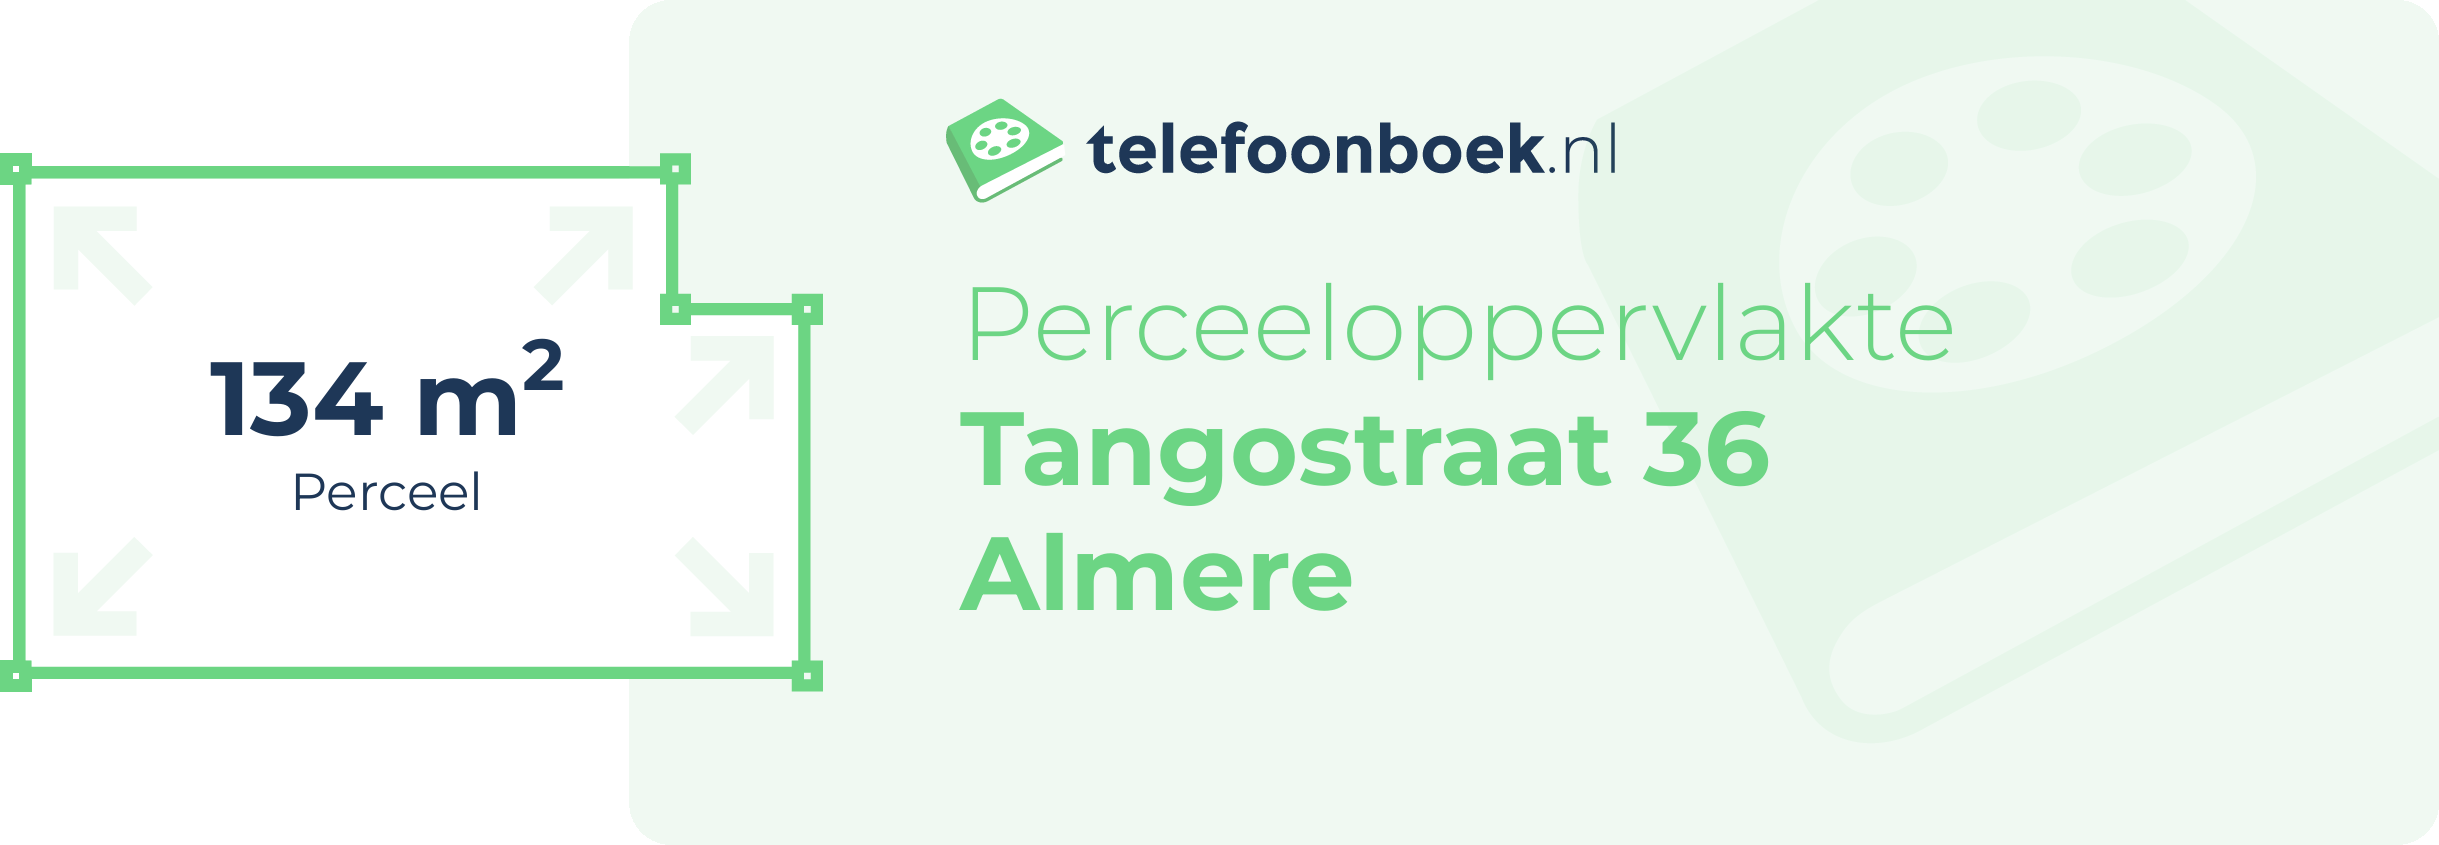 Perceeloppervlakte Tangostraat 36 Almere